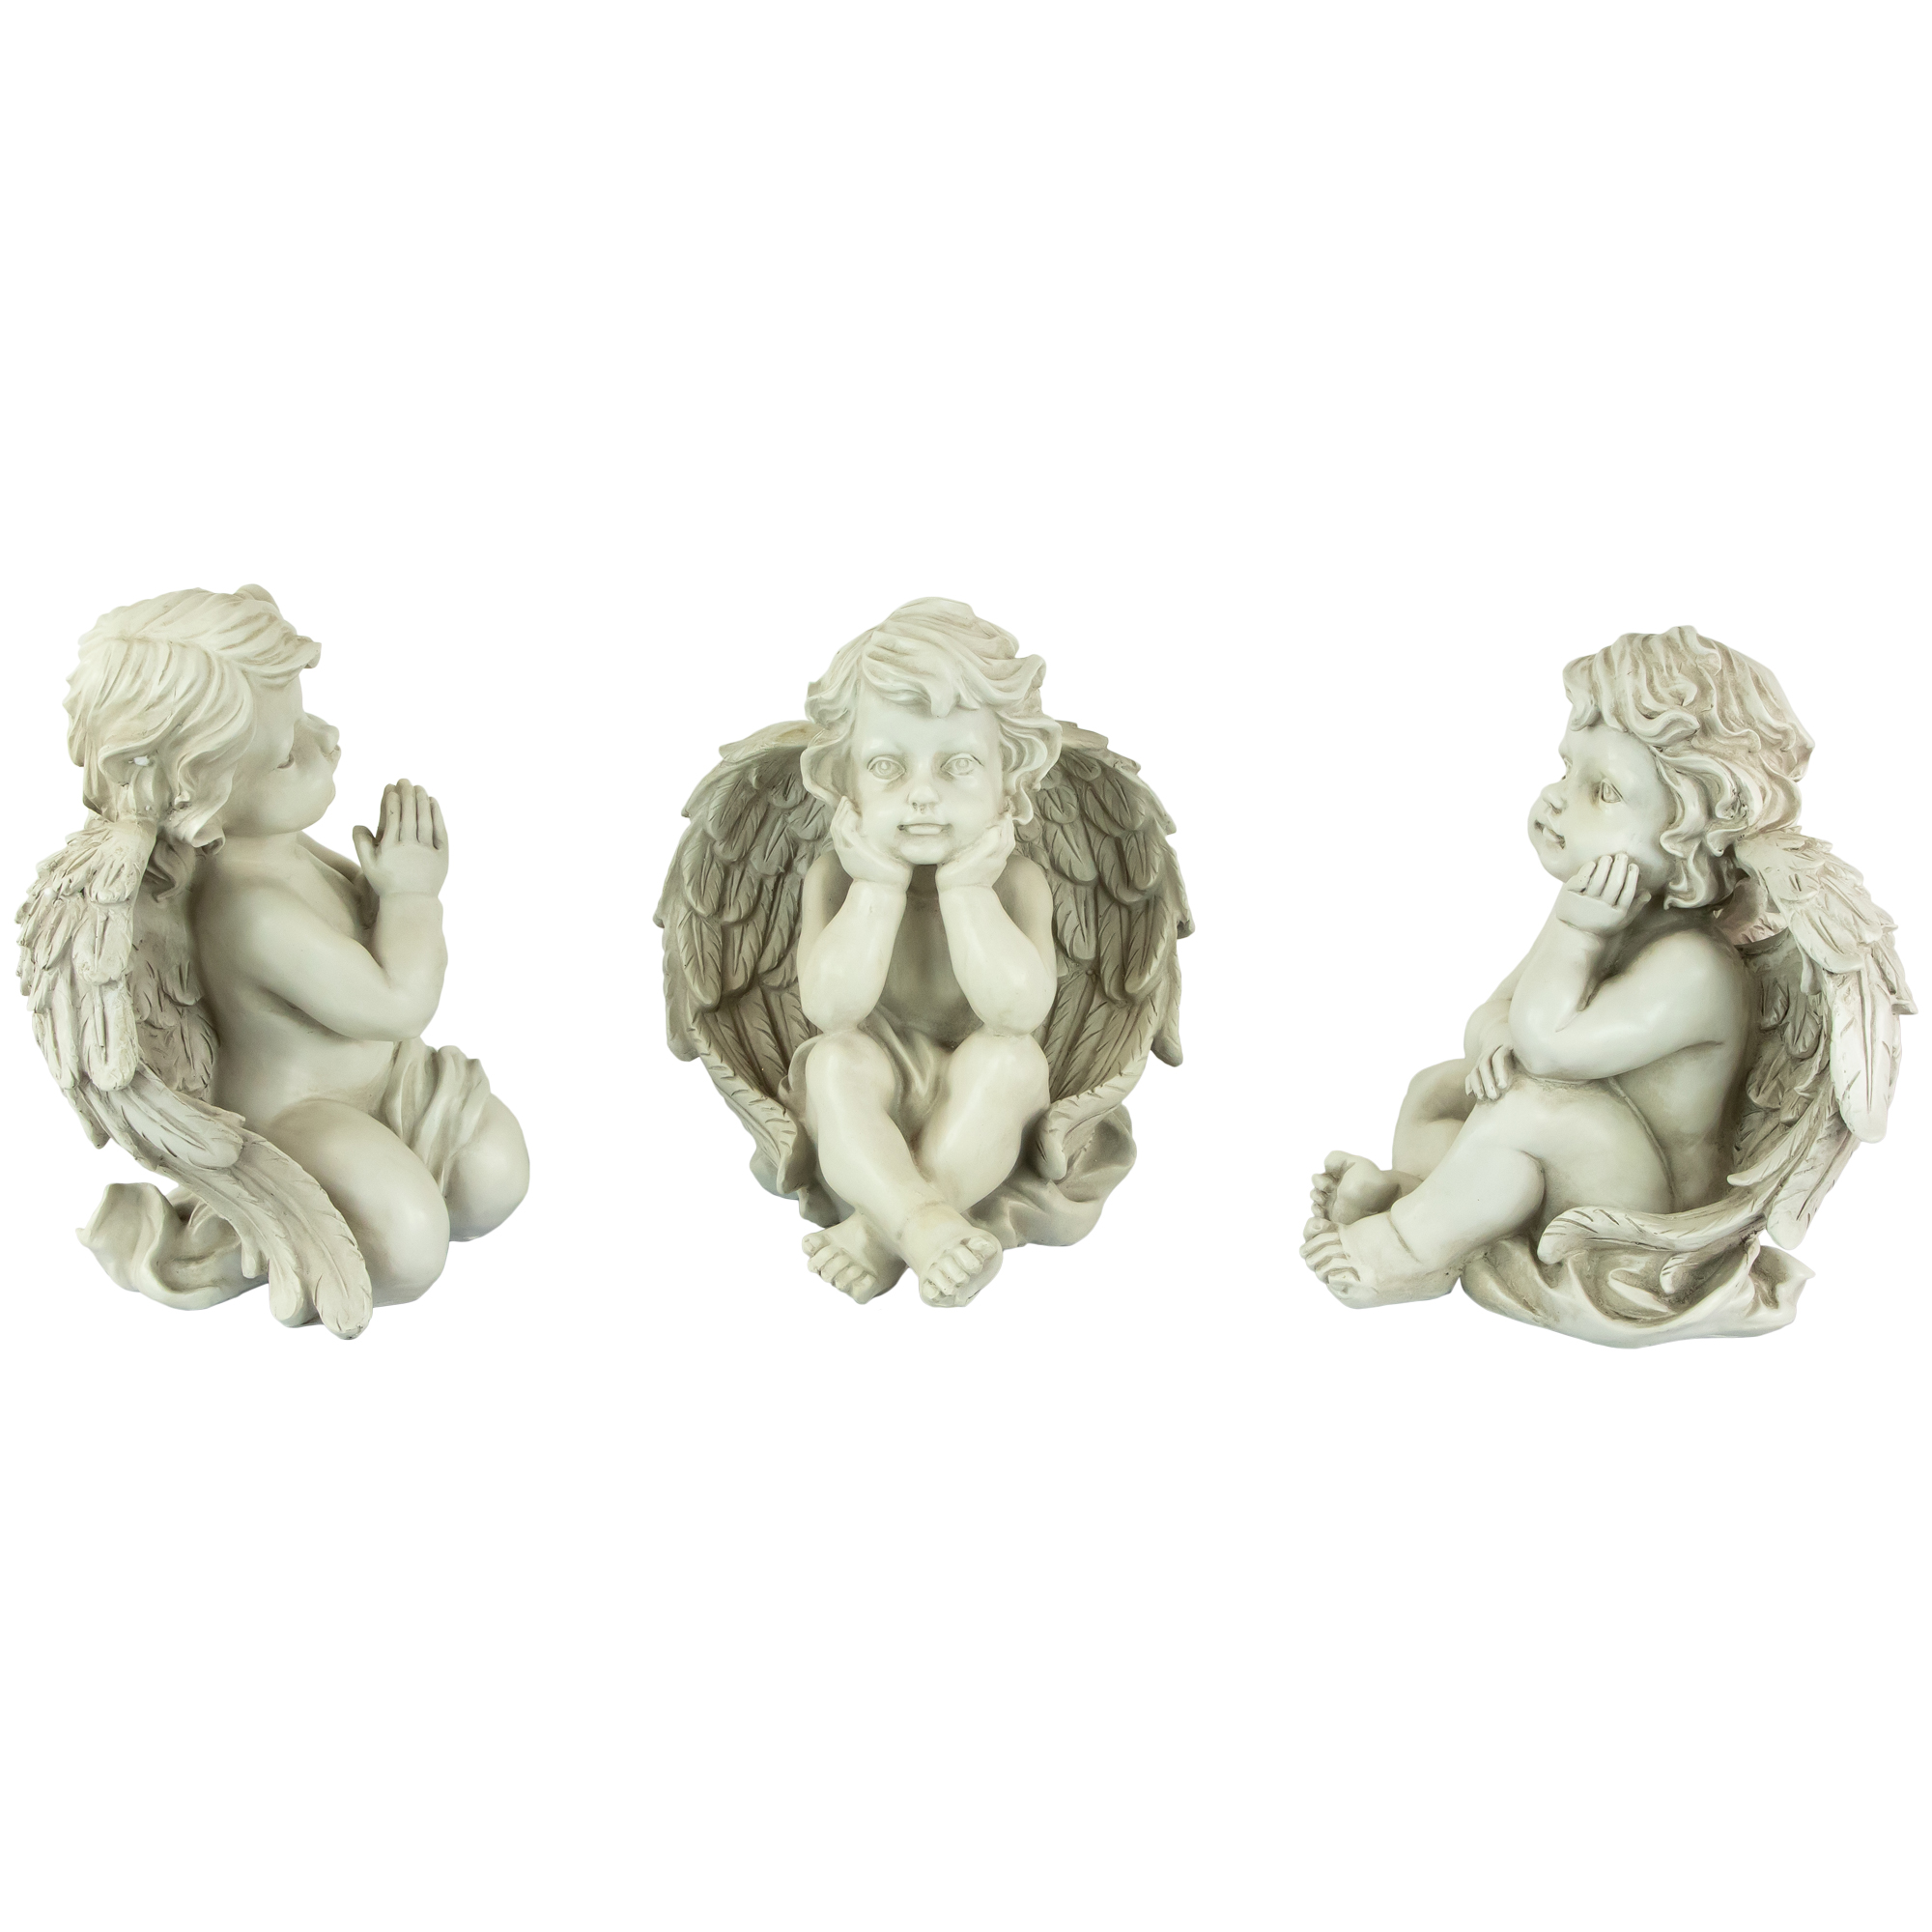 Northlight Set of 3 Sitting Cherub Angel Outdoor Patio Garden Statues 11" - White - image 3 of 4